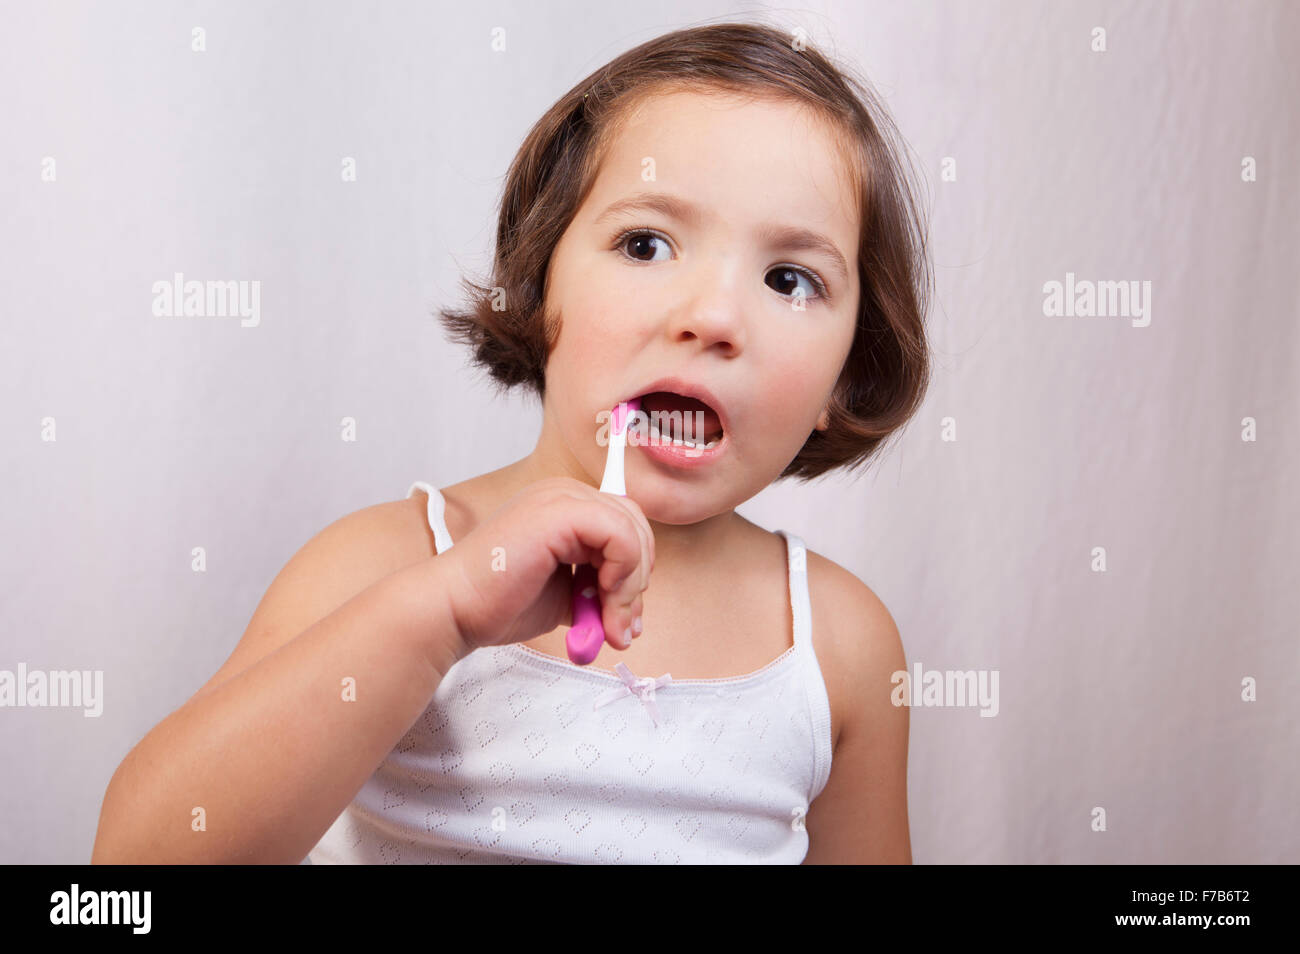 Little brown eye girl brushing her teeth. Isolated over white background Stock Photo